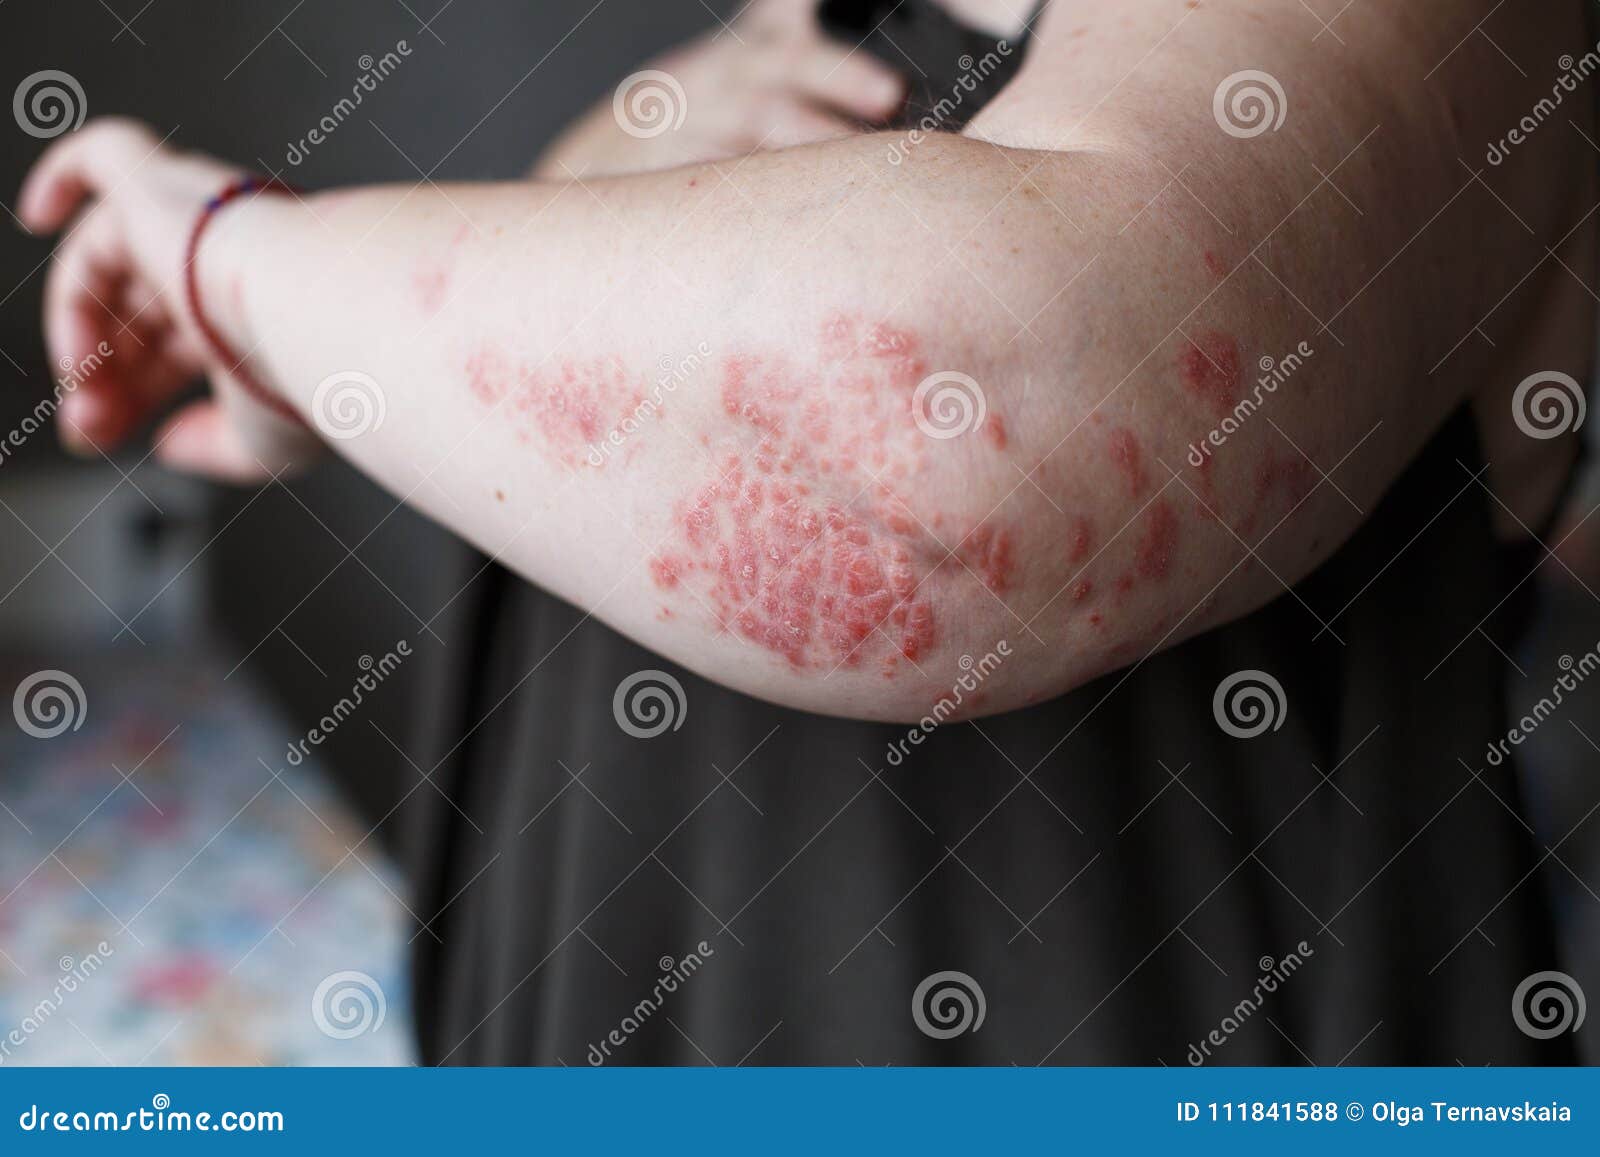 is skin psoriasis an autoimmune disease)